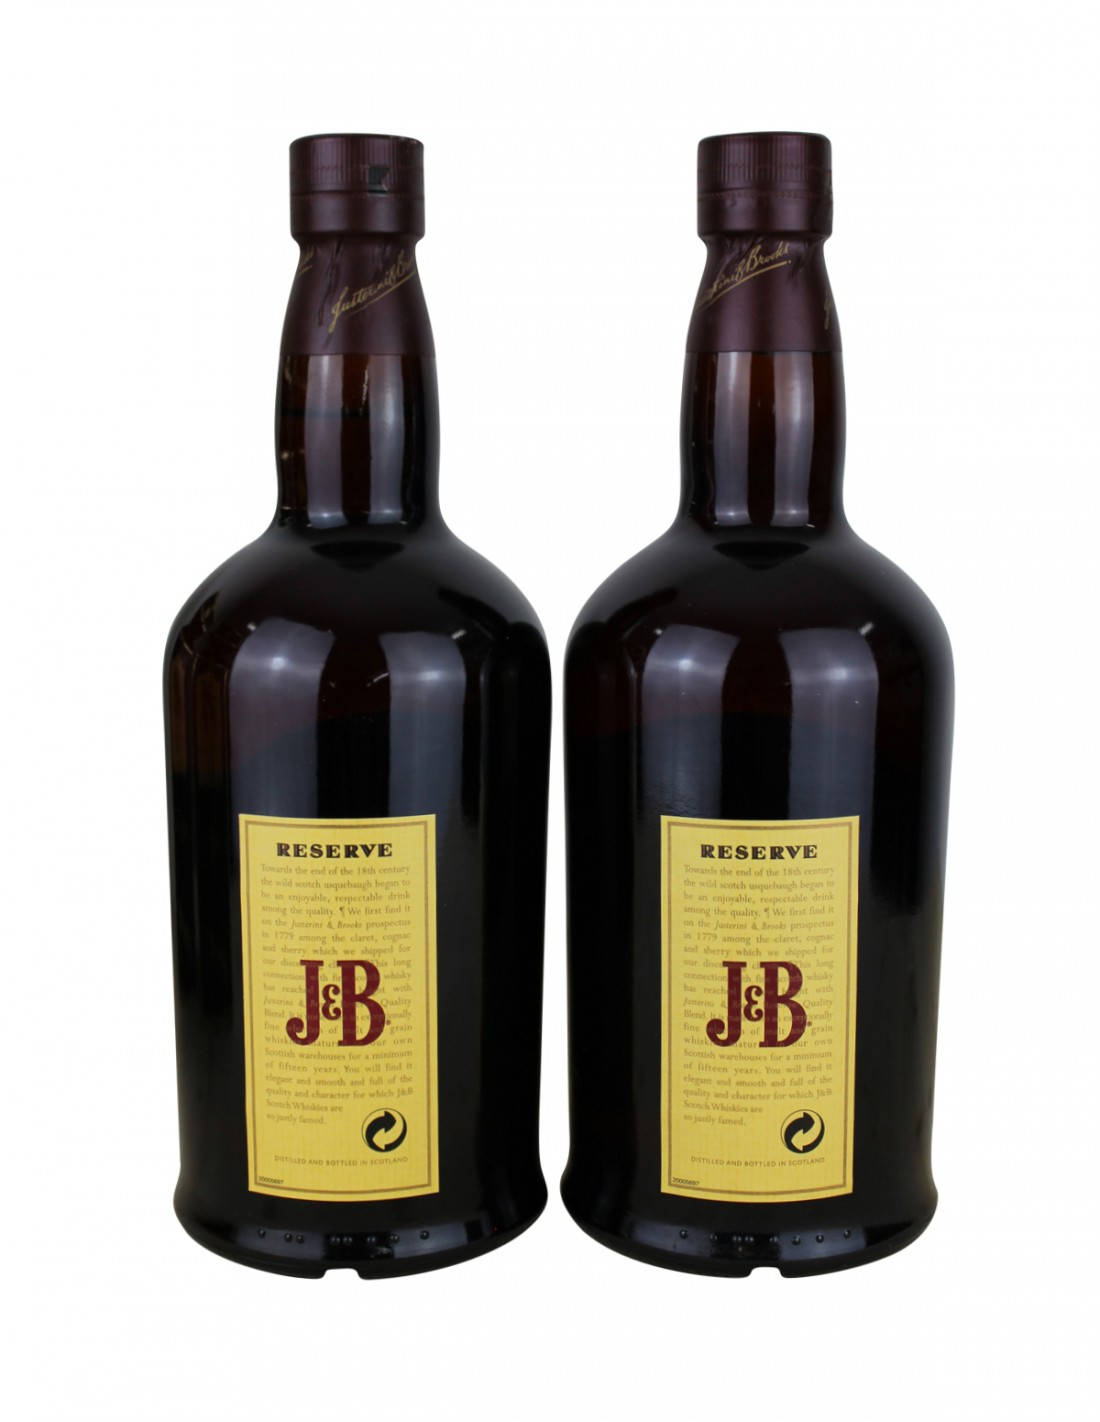 Caption: Sophisticated J&B Reserve Black Bottle Wallpaper